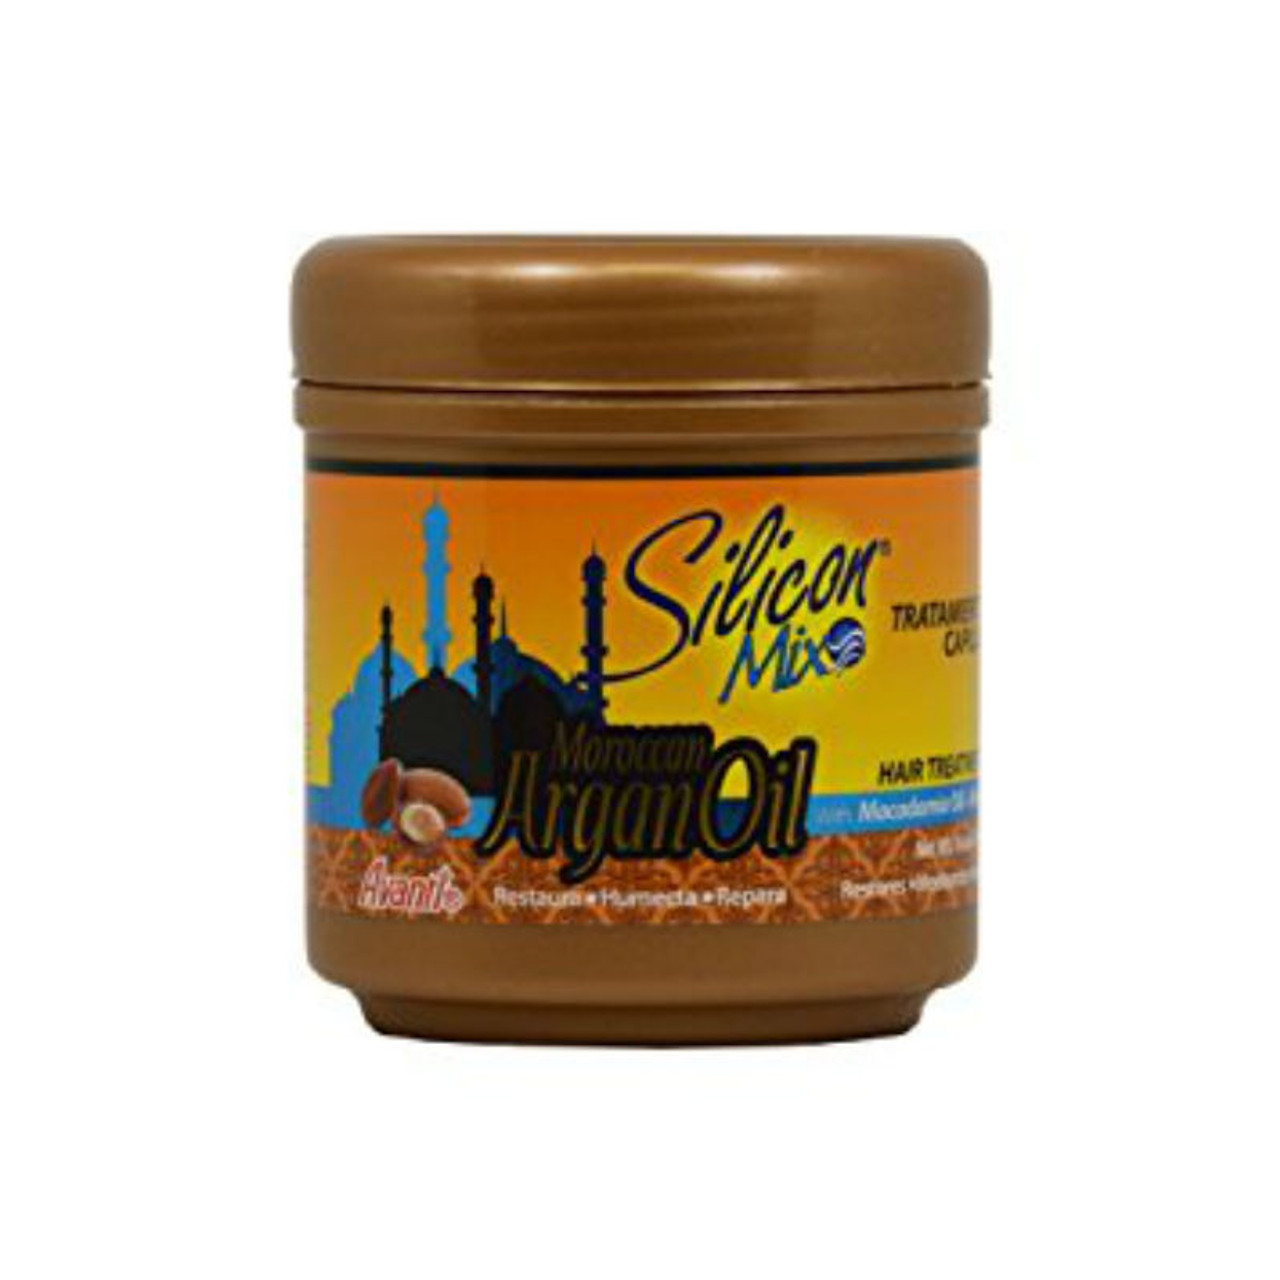 Silicon Mix Moroccan Argan Oil Hair Treatment (16 oz